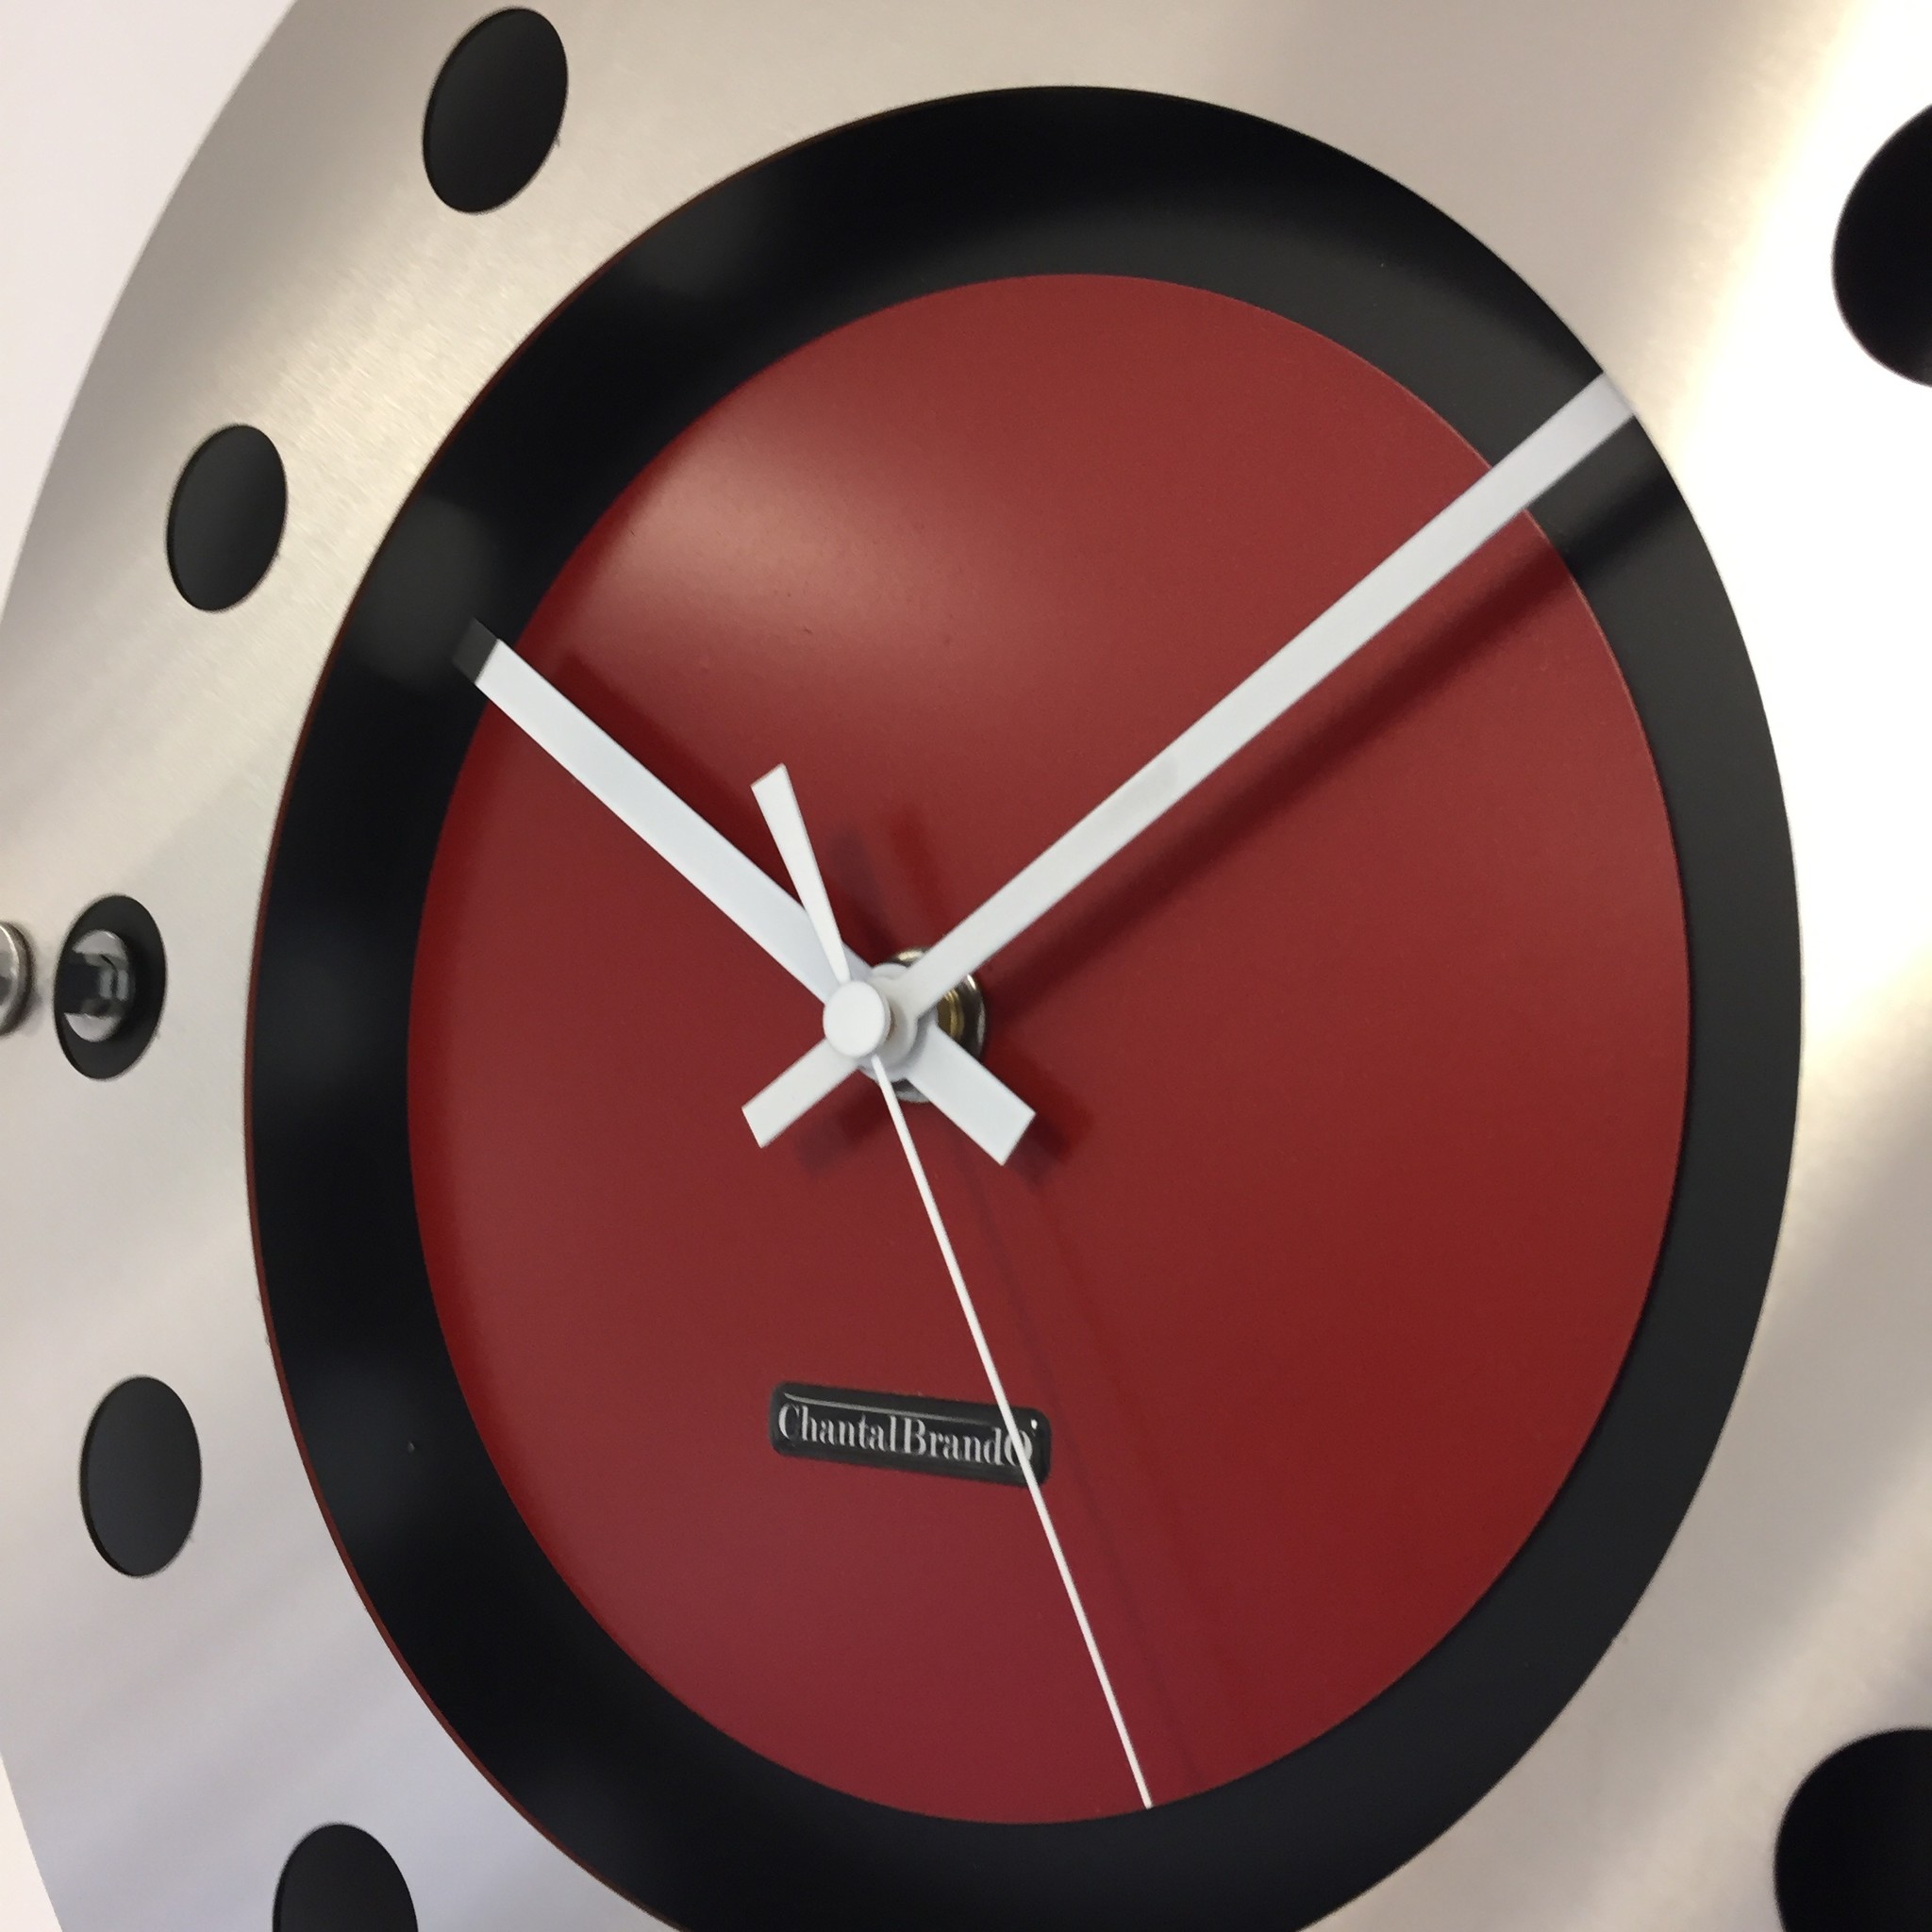 ChantalBrandO Design - Wandklok mecanica volledig zwart met rood color kleine binnen cirkel wit pointer modern dutch design handgemaakt 40 cm